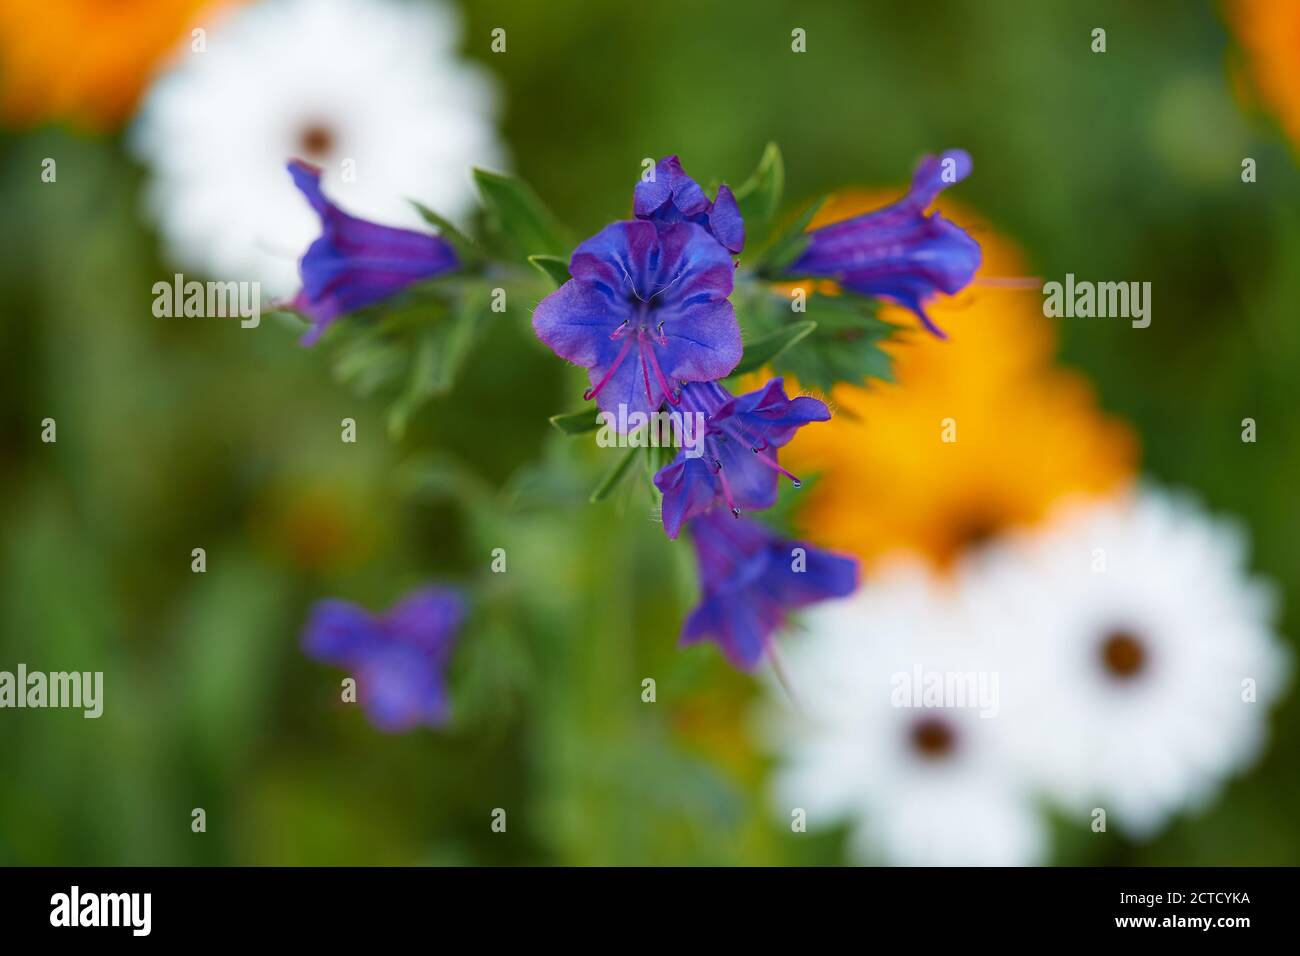 Blue Weed flower amongst White and Orange Daisies, Atlantis Western Cape Stock Photo